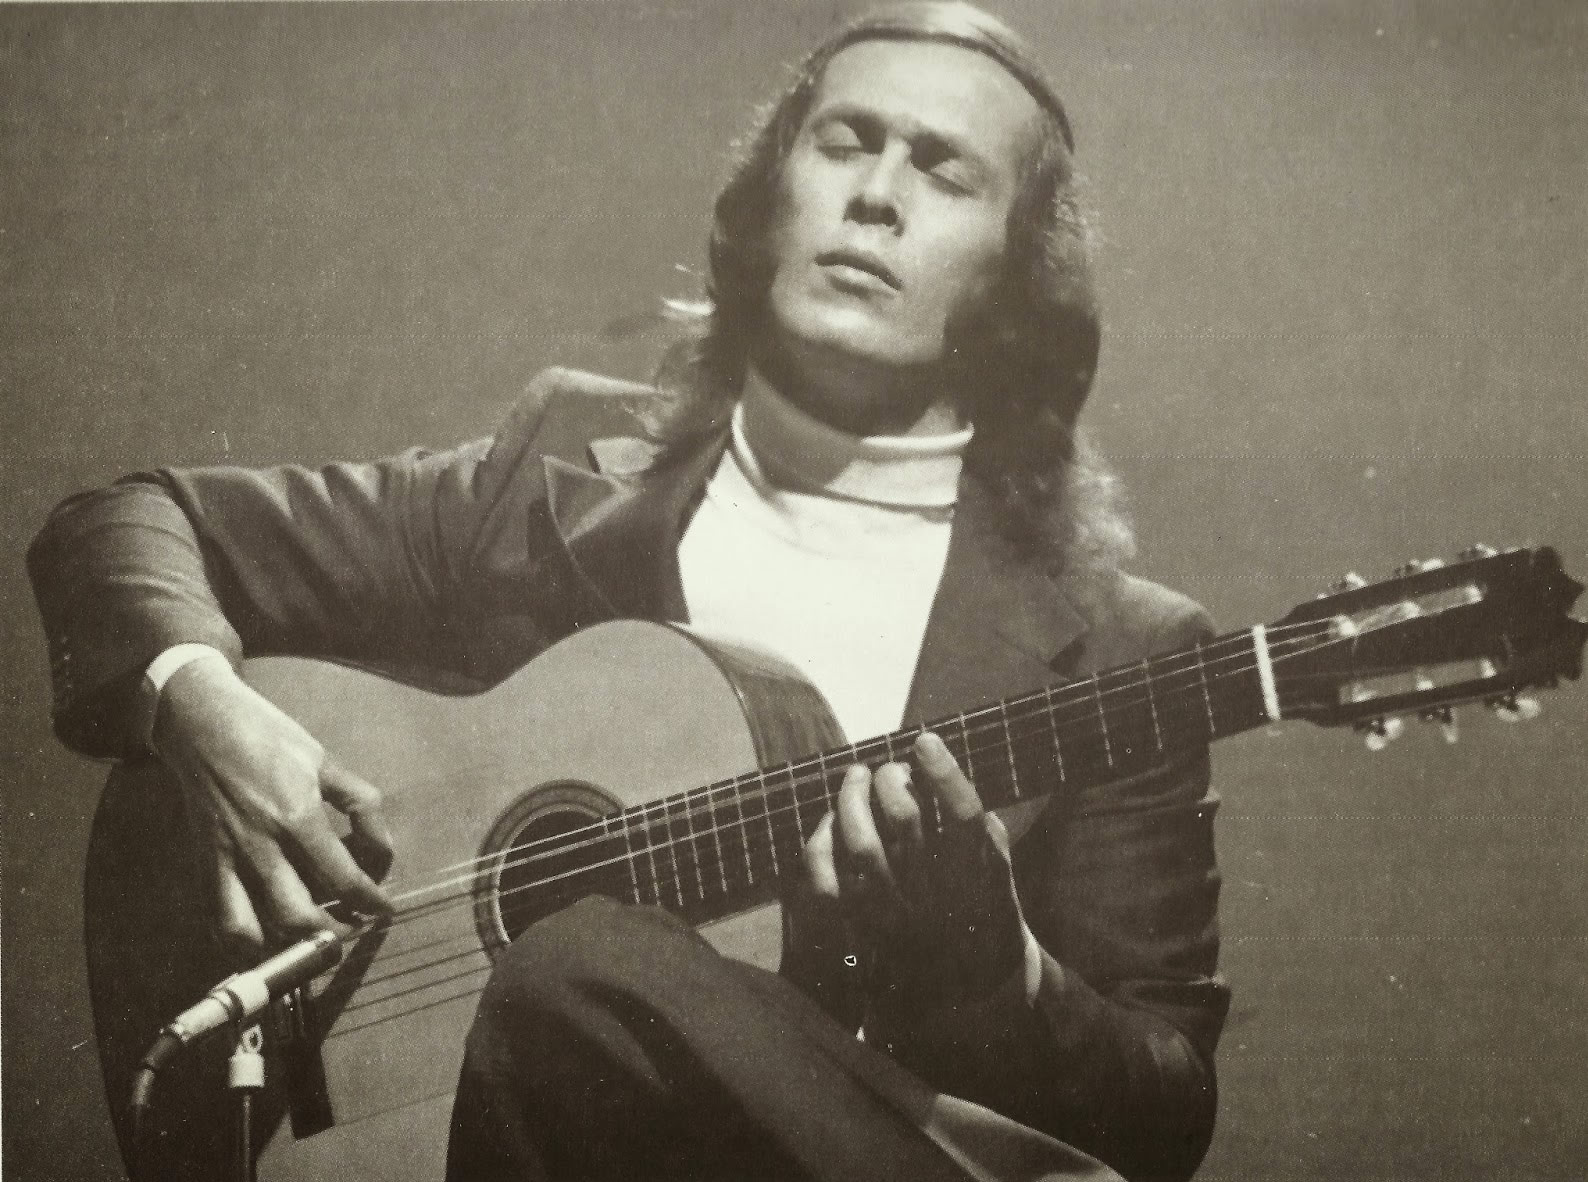 Paco de Lucía - December 21st, 1947 25th, 2014. Live Forever In Music